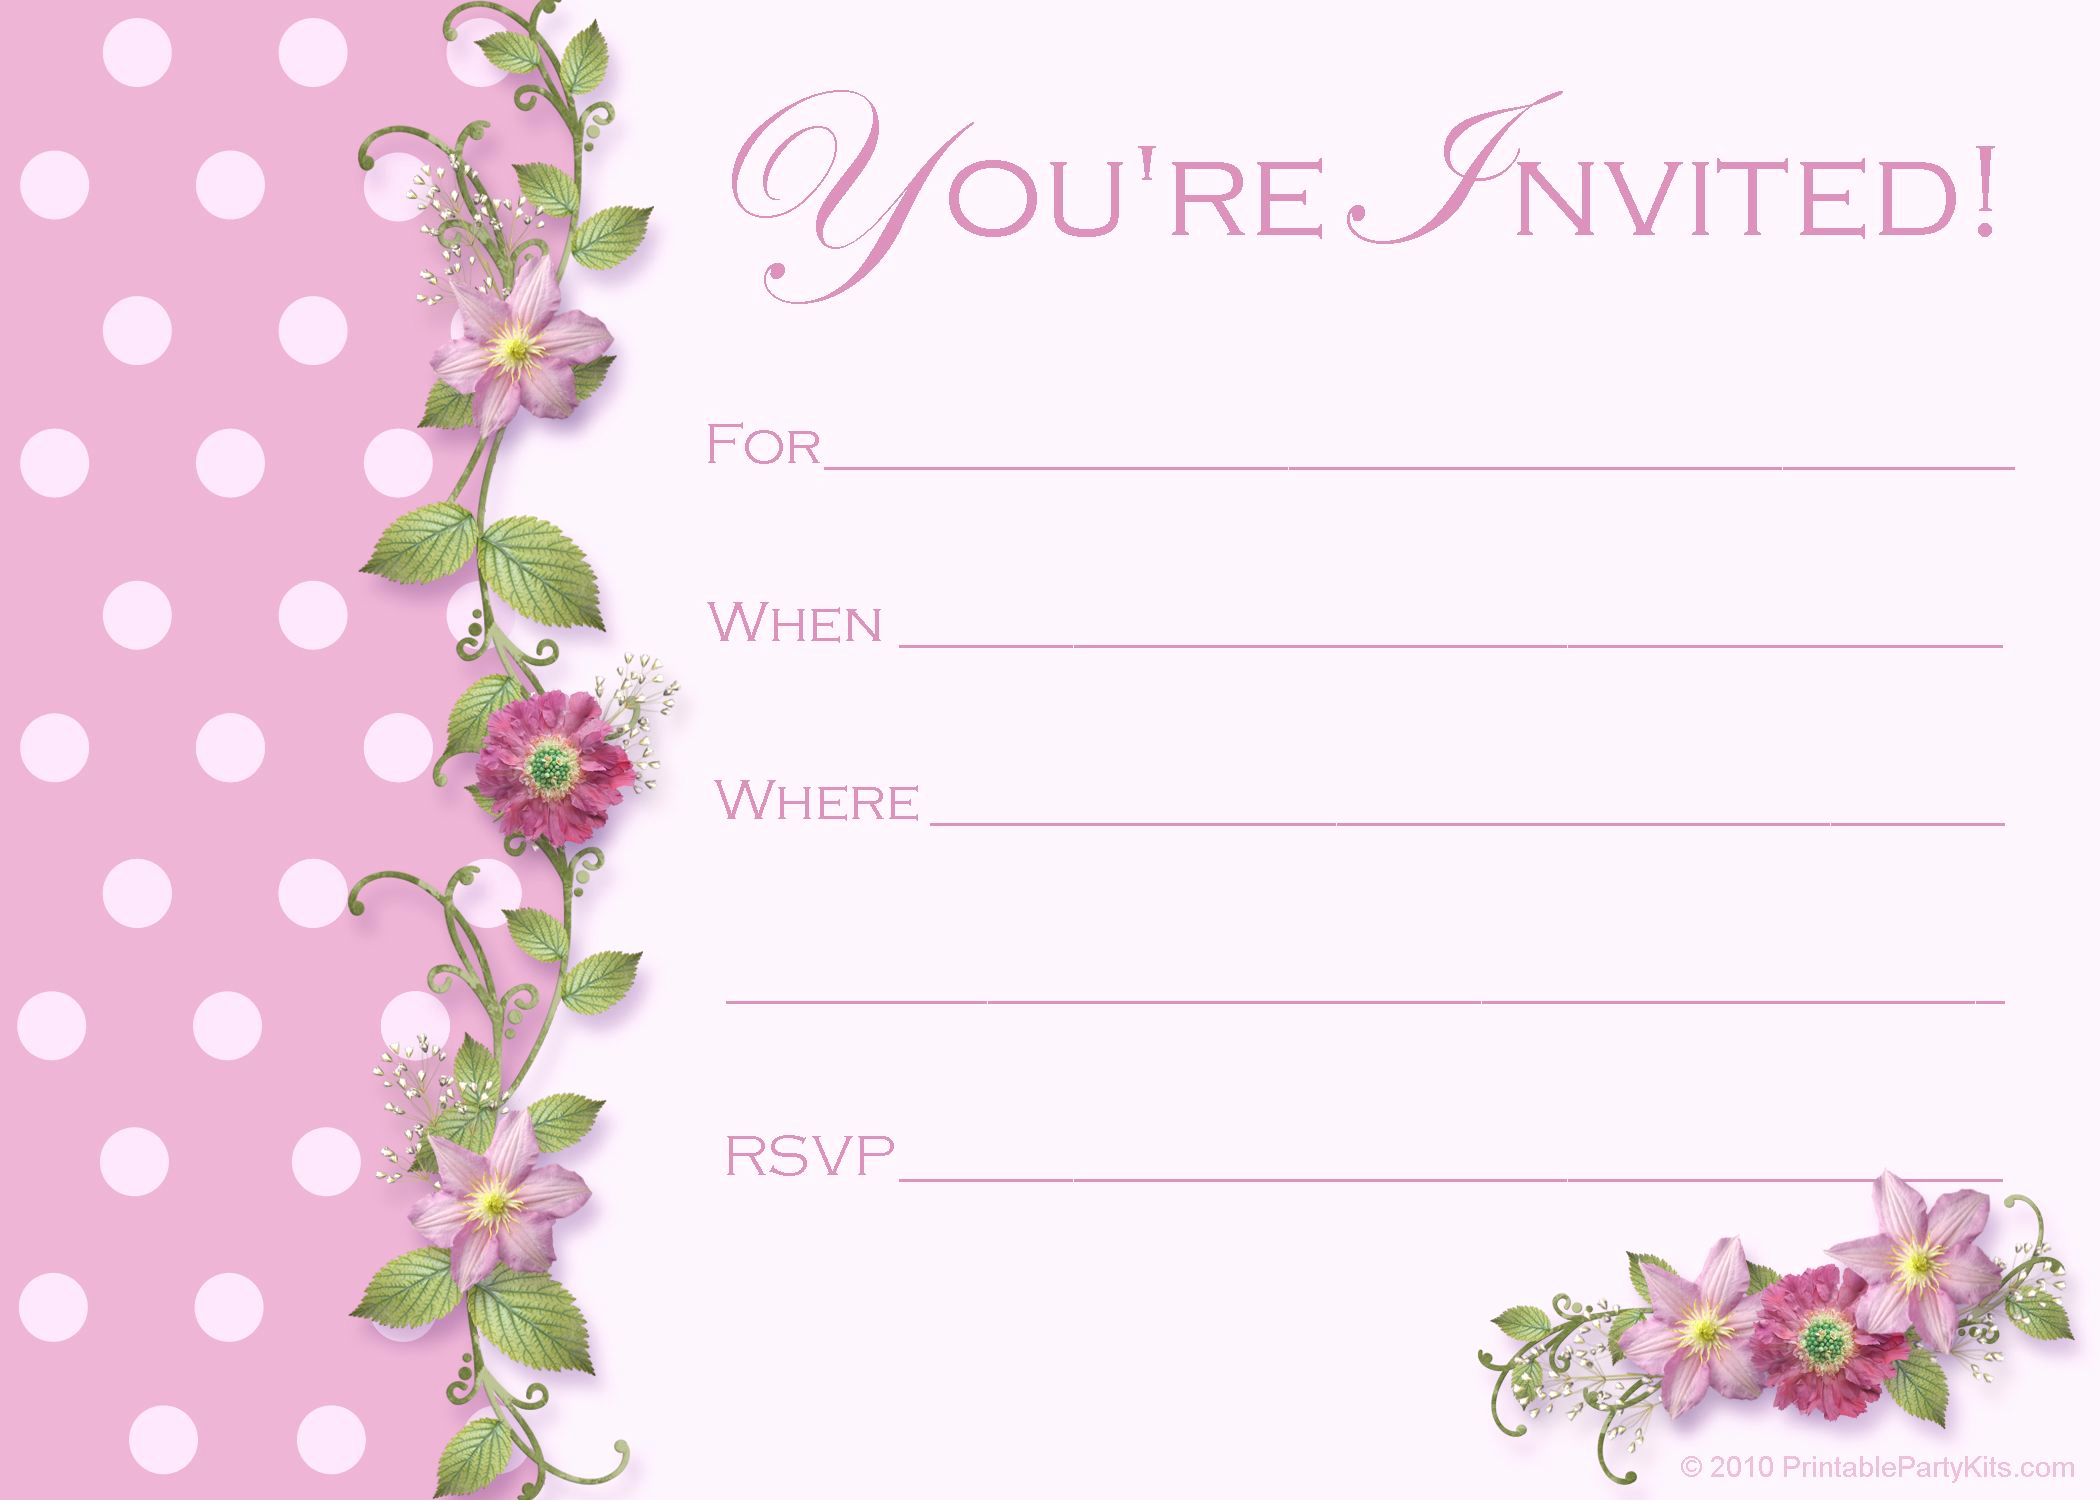 Free Blank Invitation Templates Inspirational Image for Blank Birthday Invitations Templates